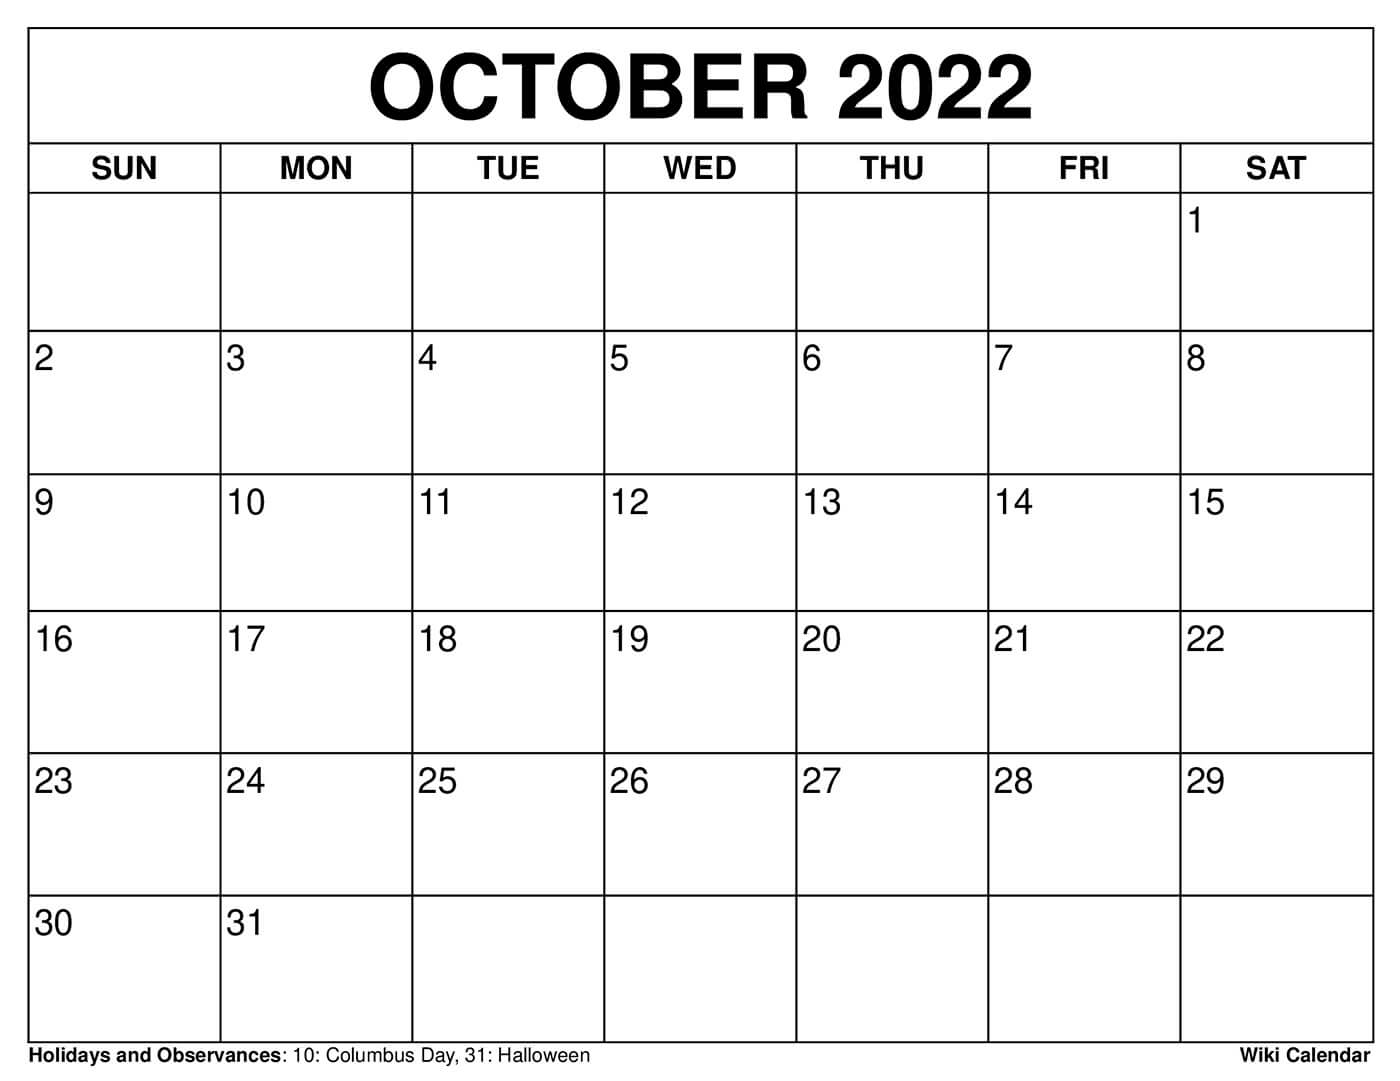 October Calendar To Print 2022 Free Printable October 2022 Calendars - Wiki Calendar